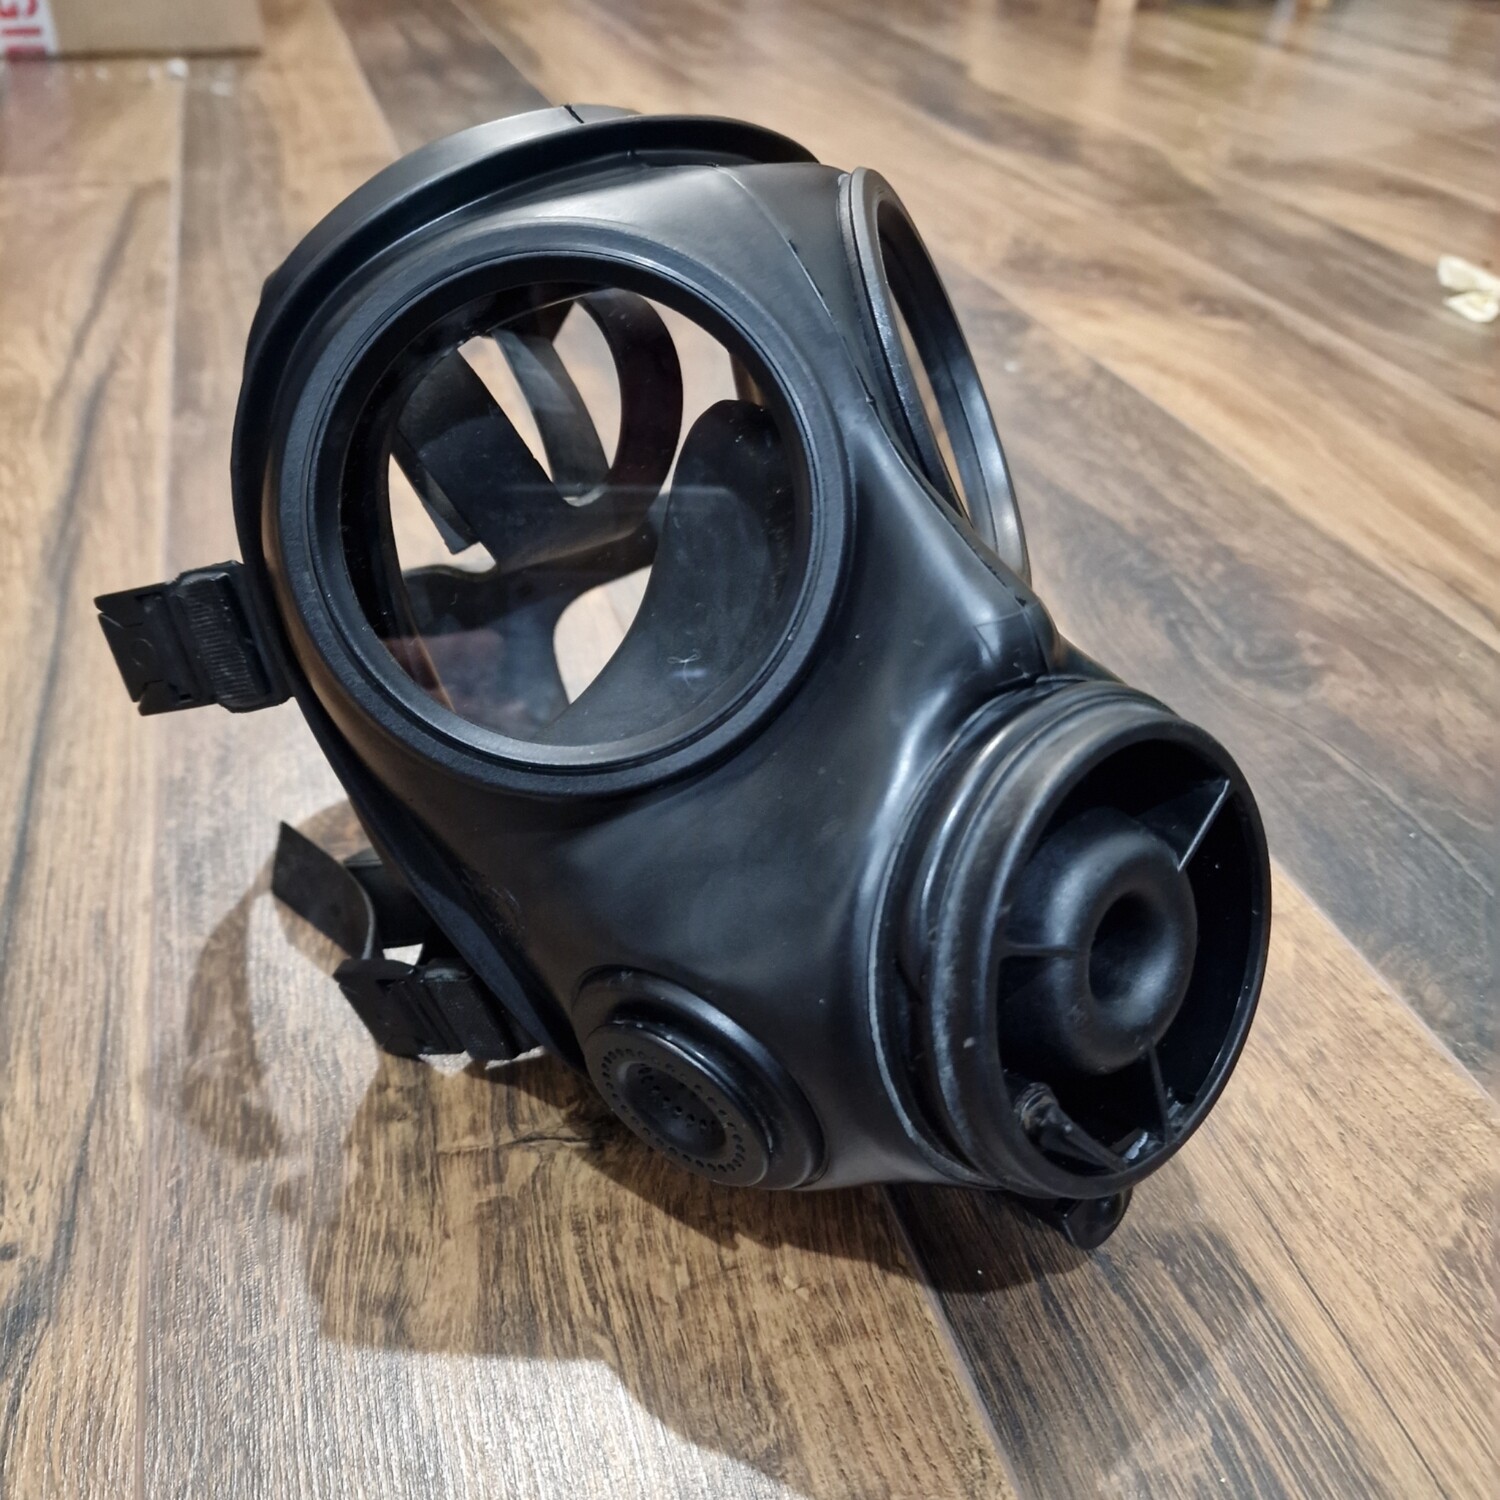 Avon S10 Gas Mask Size 3 (Medium)